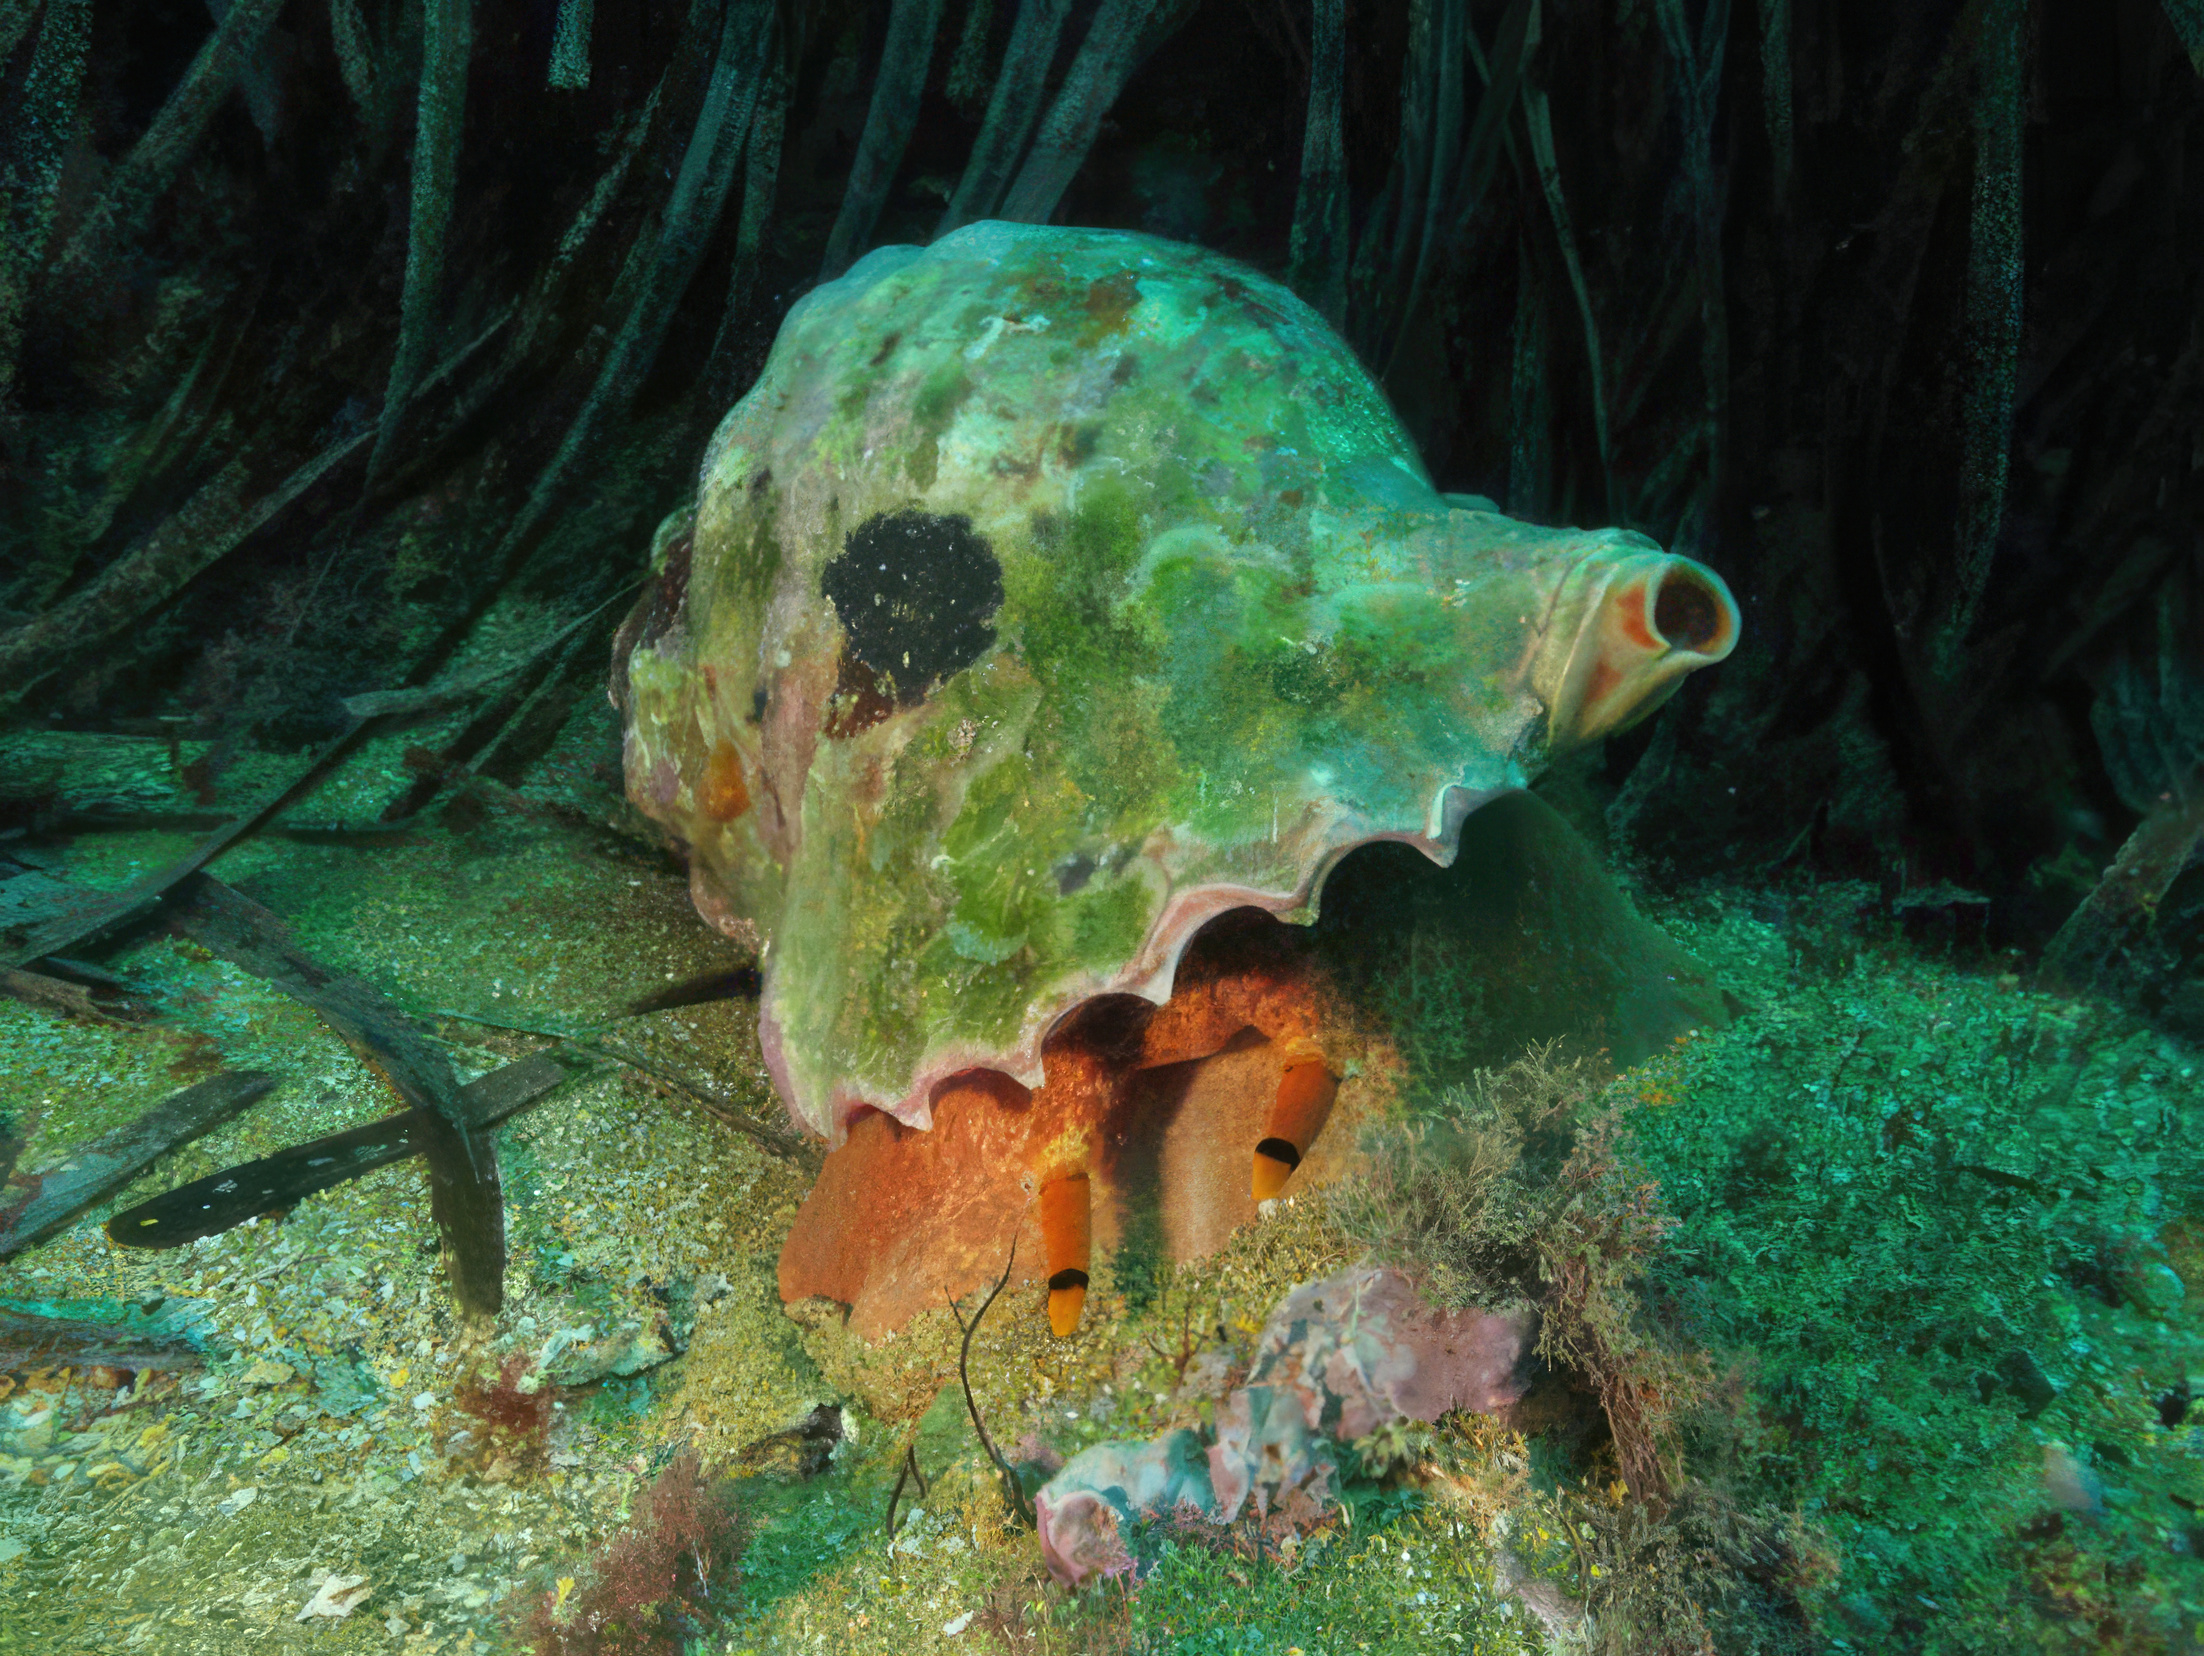 Ampliar imagen: primer plano de una colorida criatura marina